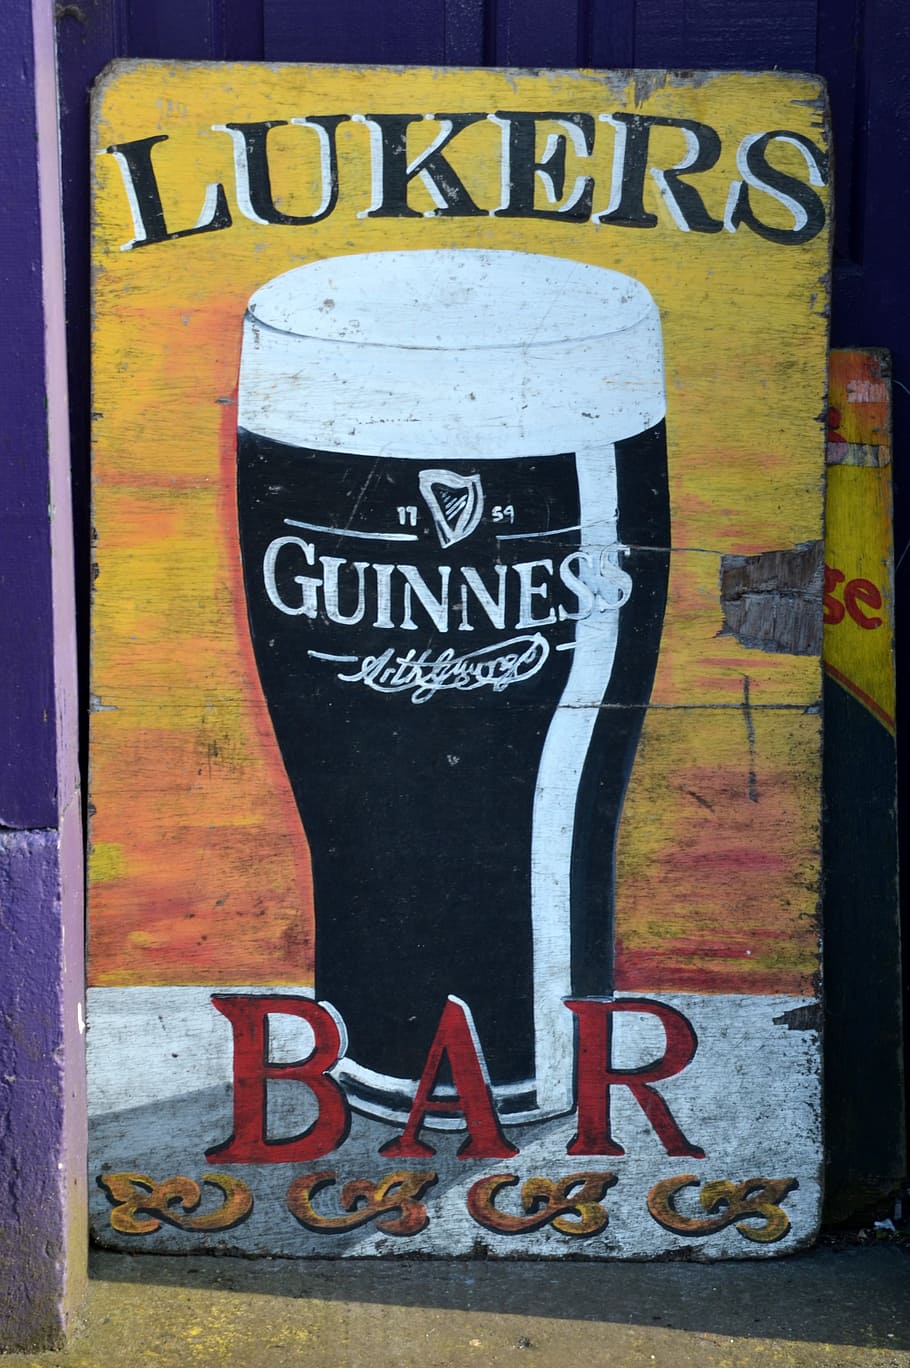 guinness, ireland, irish, pub, beer, bar, irish pub, text, western script, communication